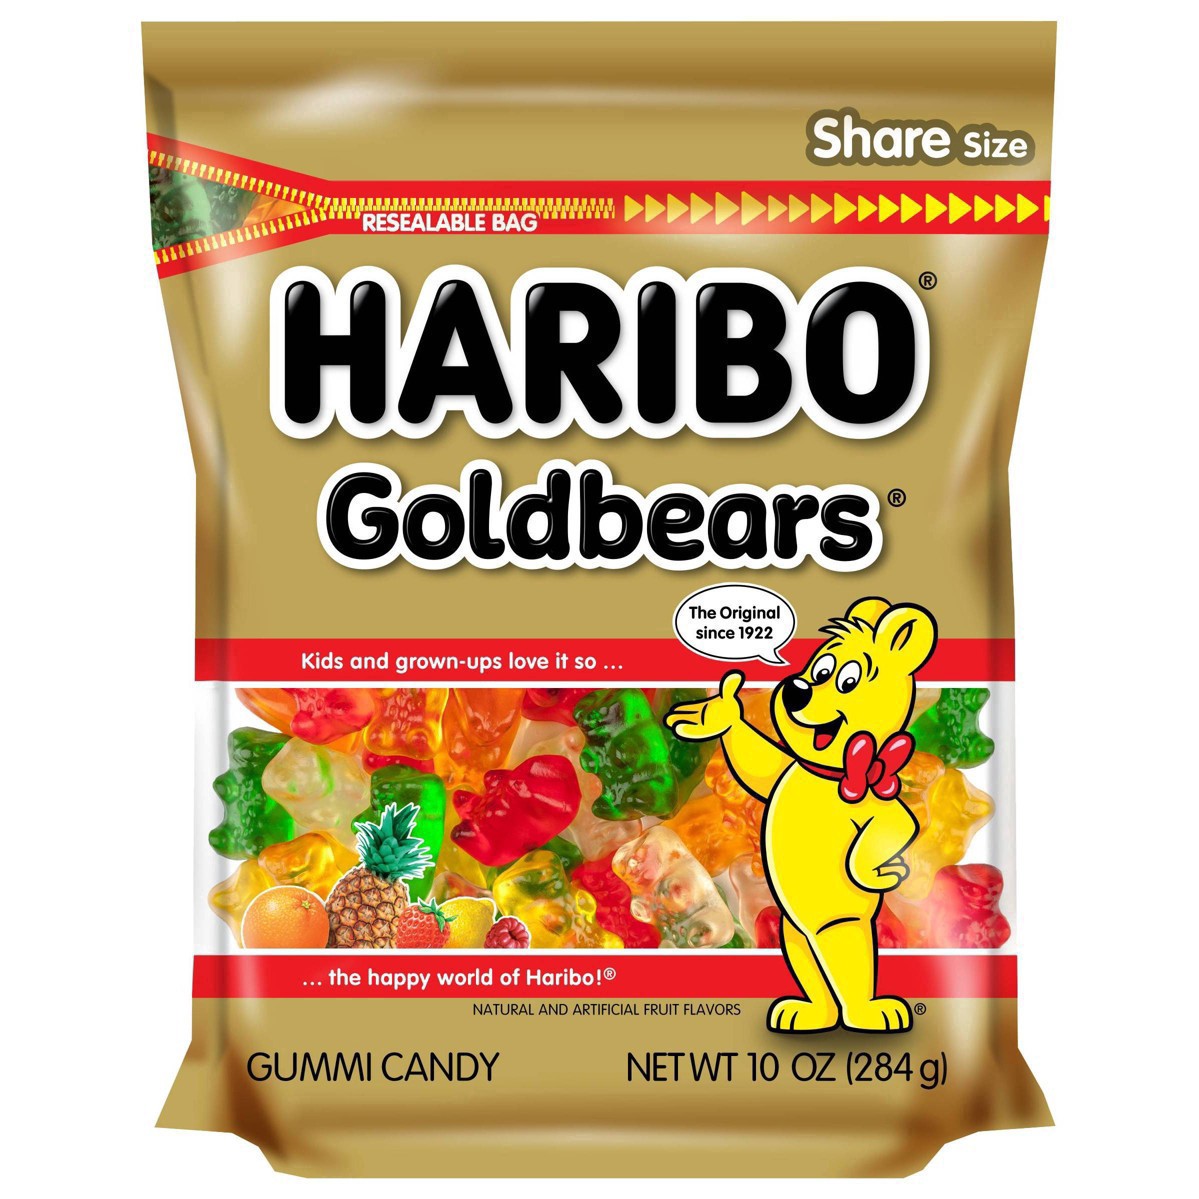 slide 19 of 22, Haribo Share Size Goldbears Gummi Candy 10 oz, 10 oz